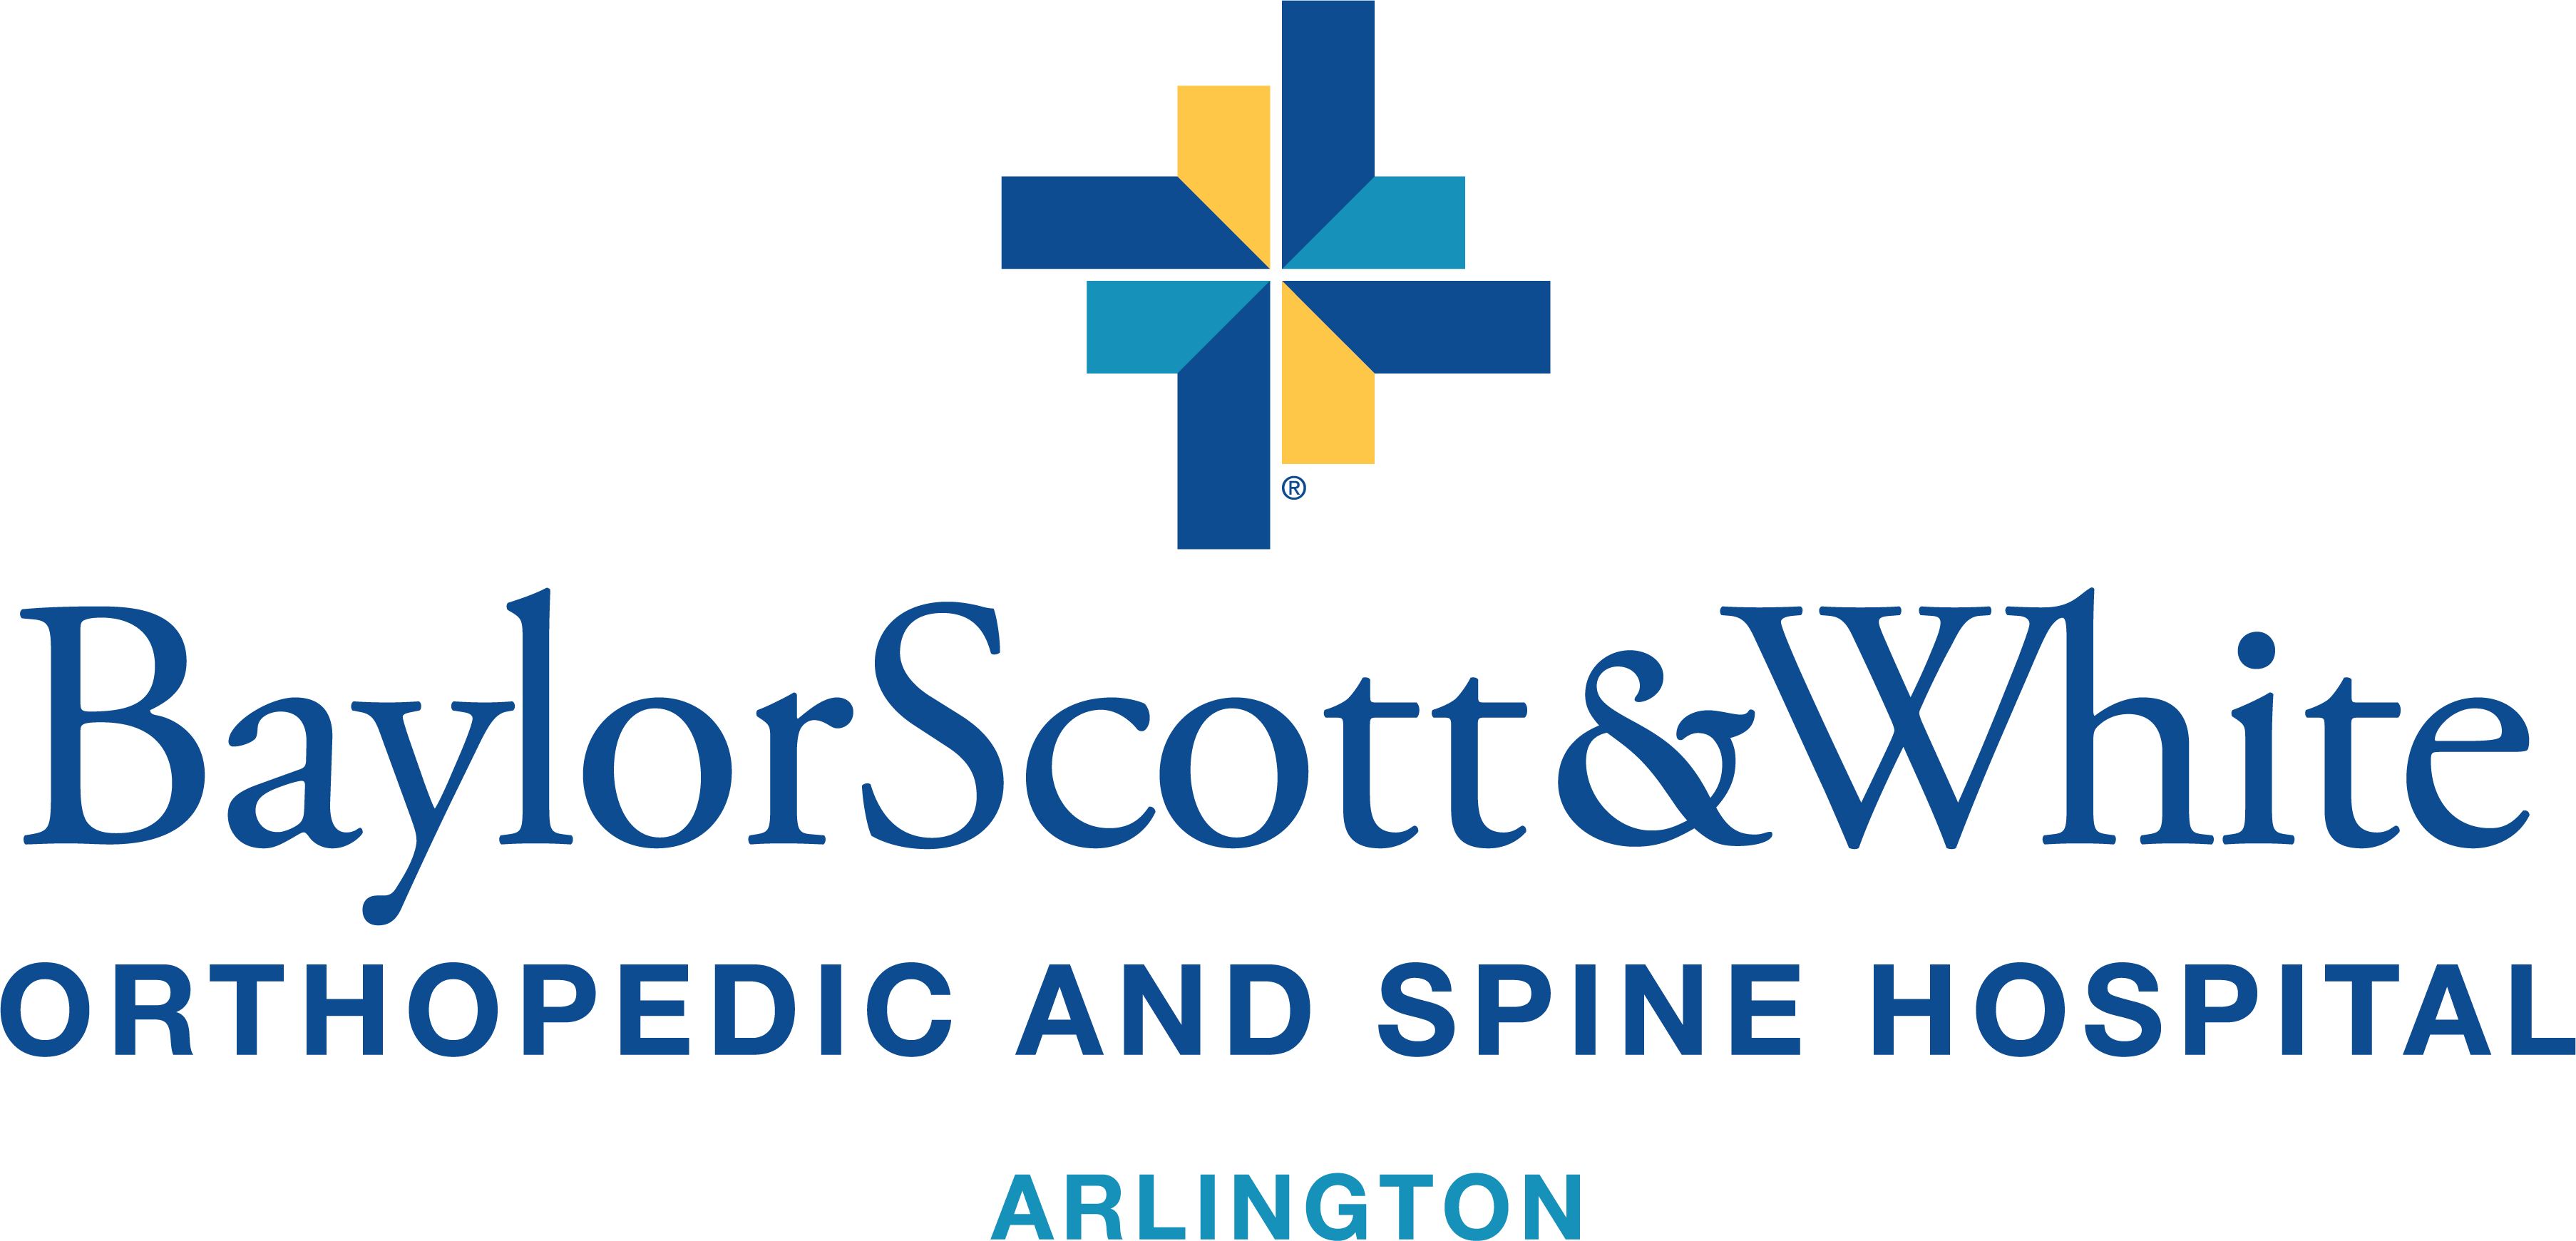 Baylor Scott & White Orthopedic and Spine Hospital - Arlington